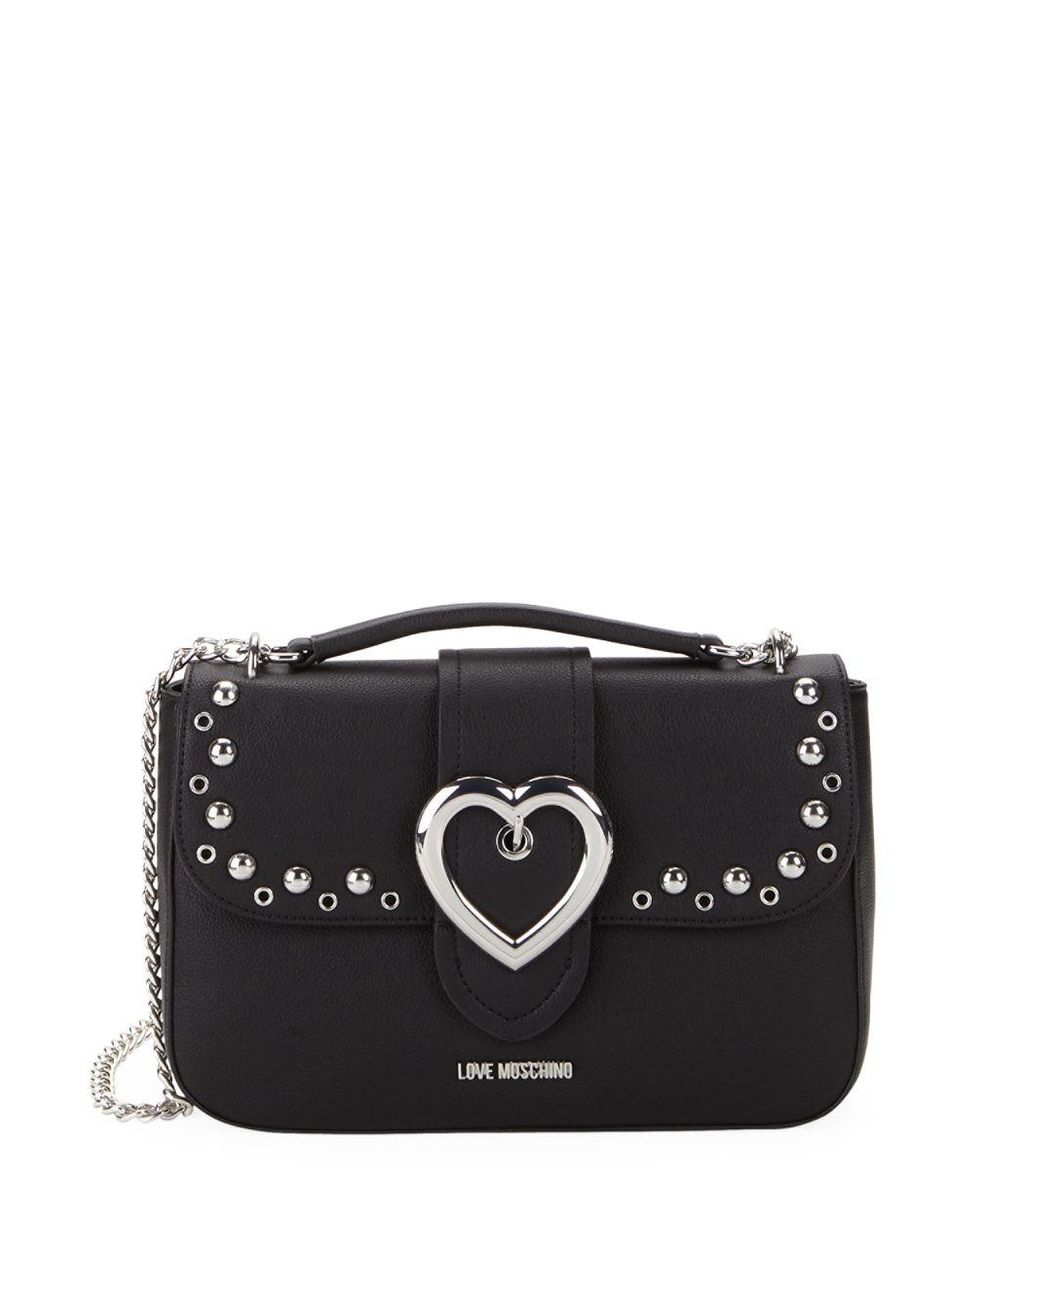 Love Moschino Studded Heart Buckle Crossbody Bag in Black - Lyst